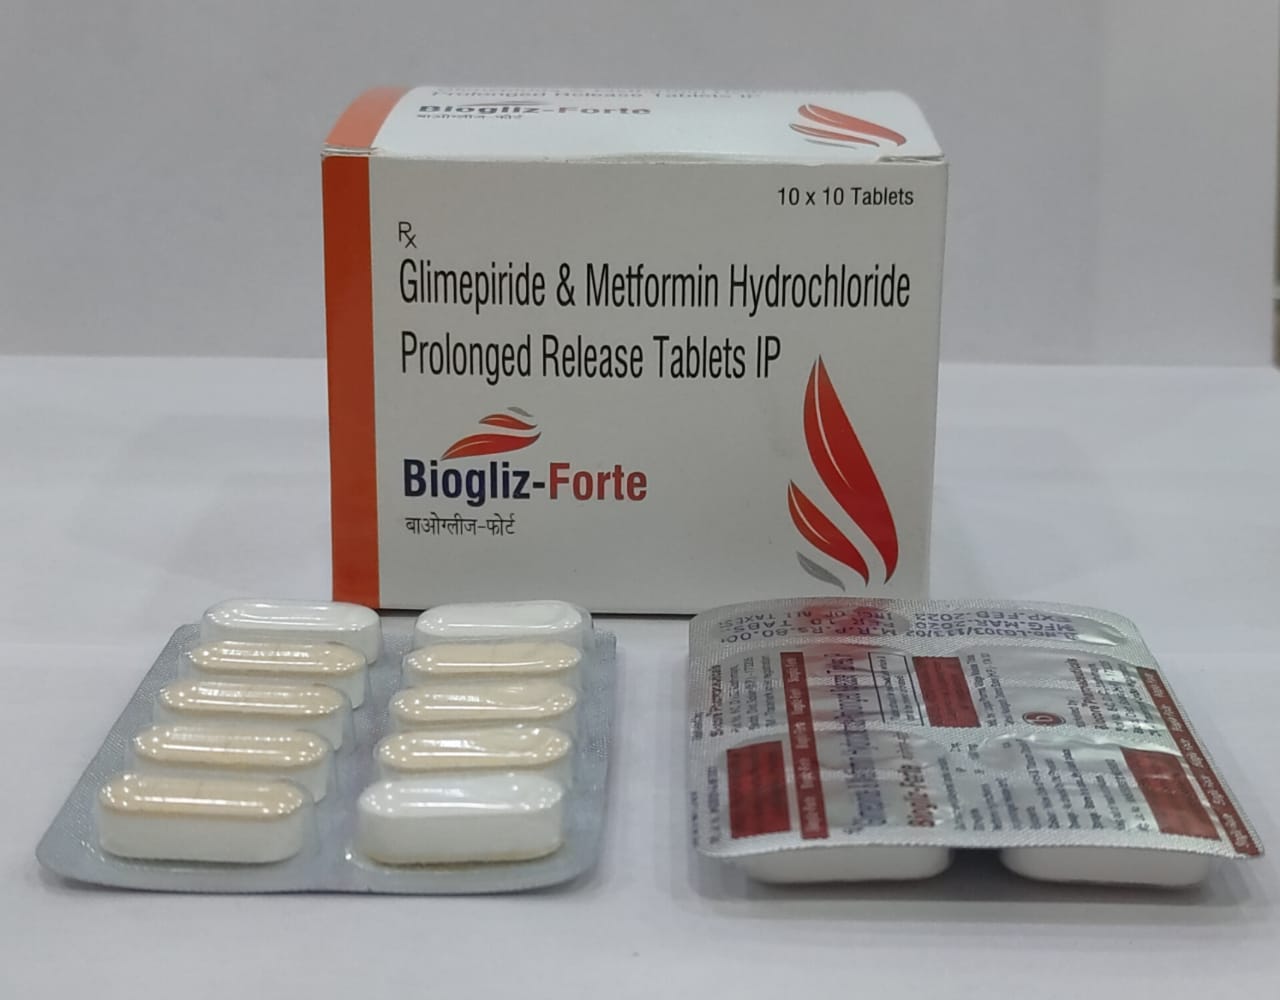 BIOGLIZ-FORTE Tablets